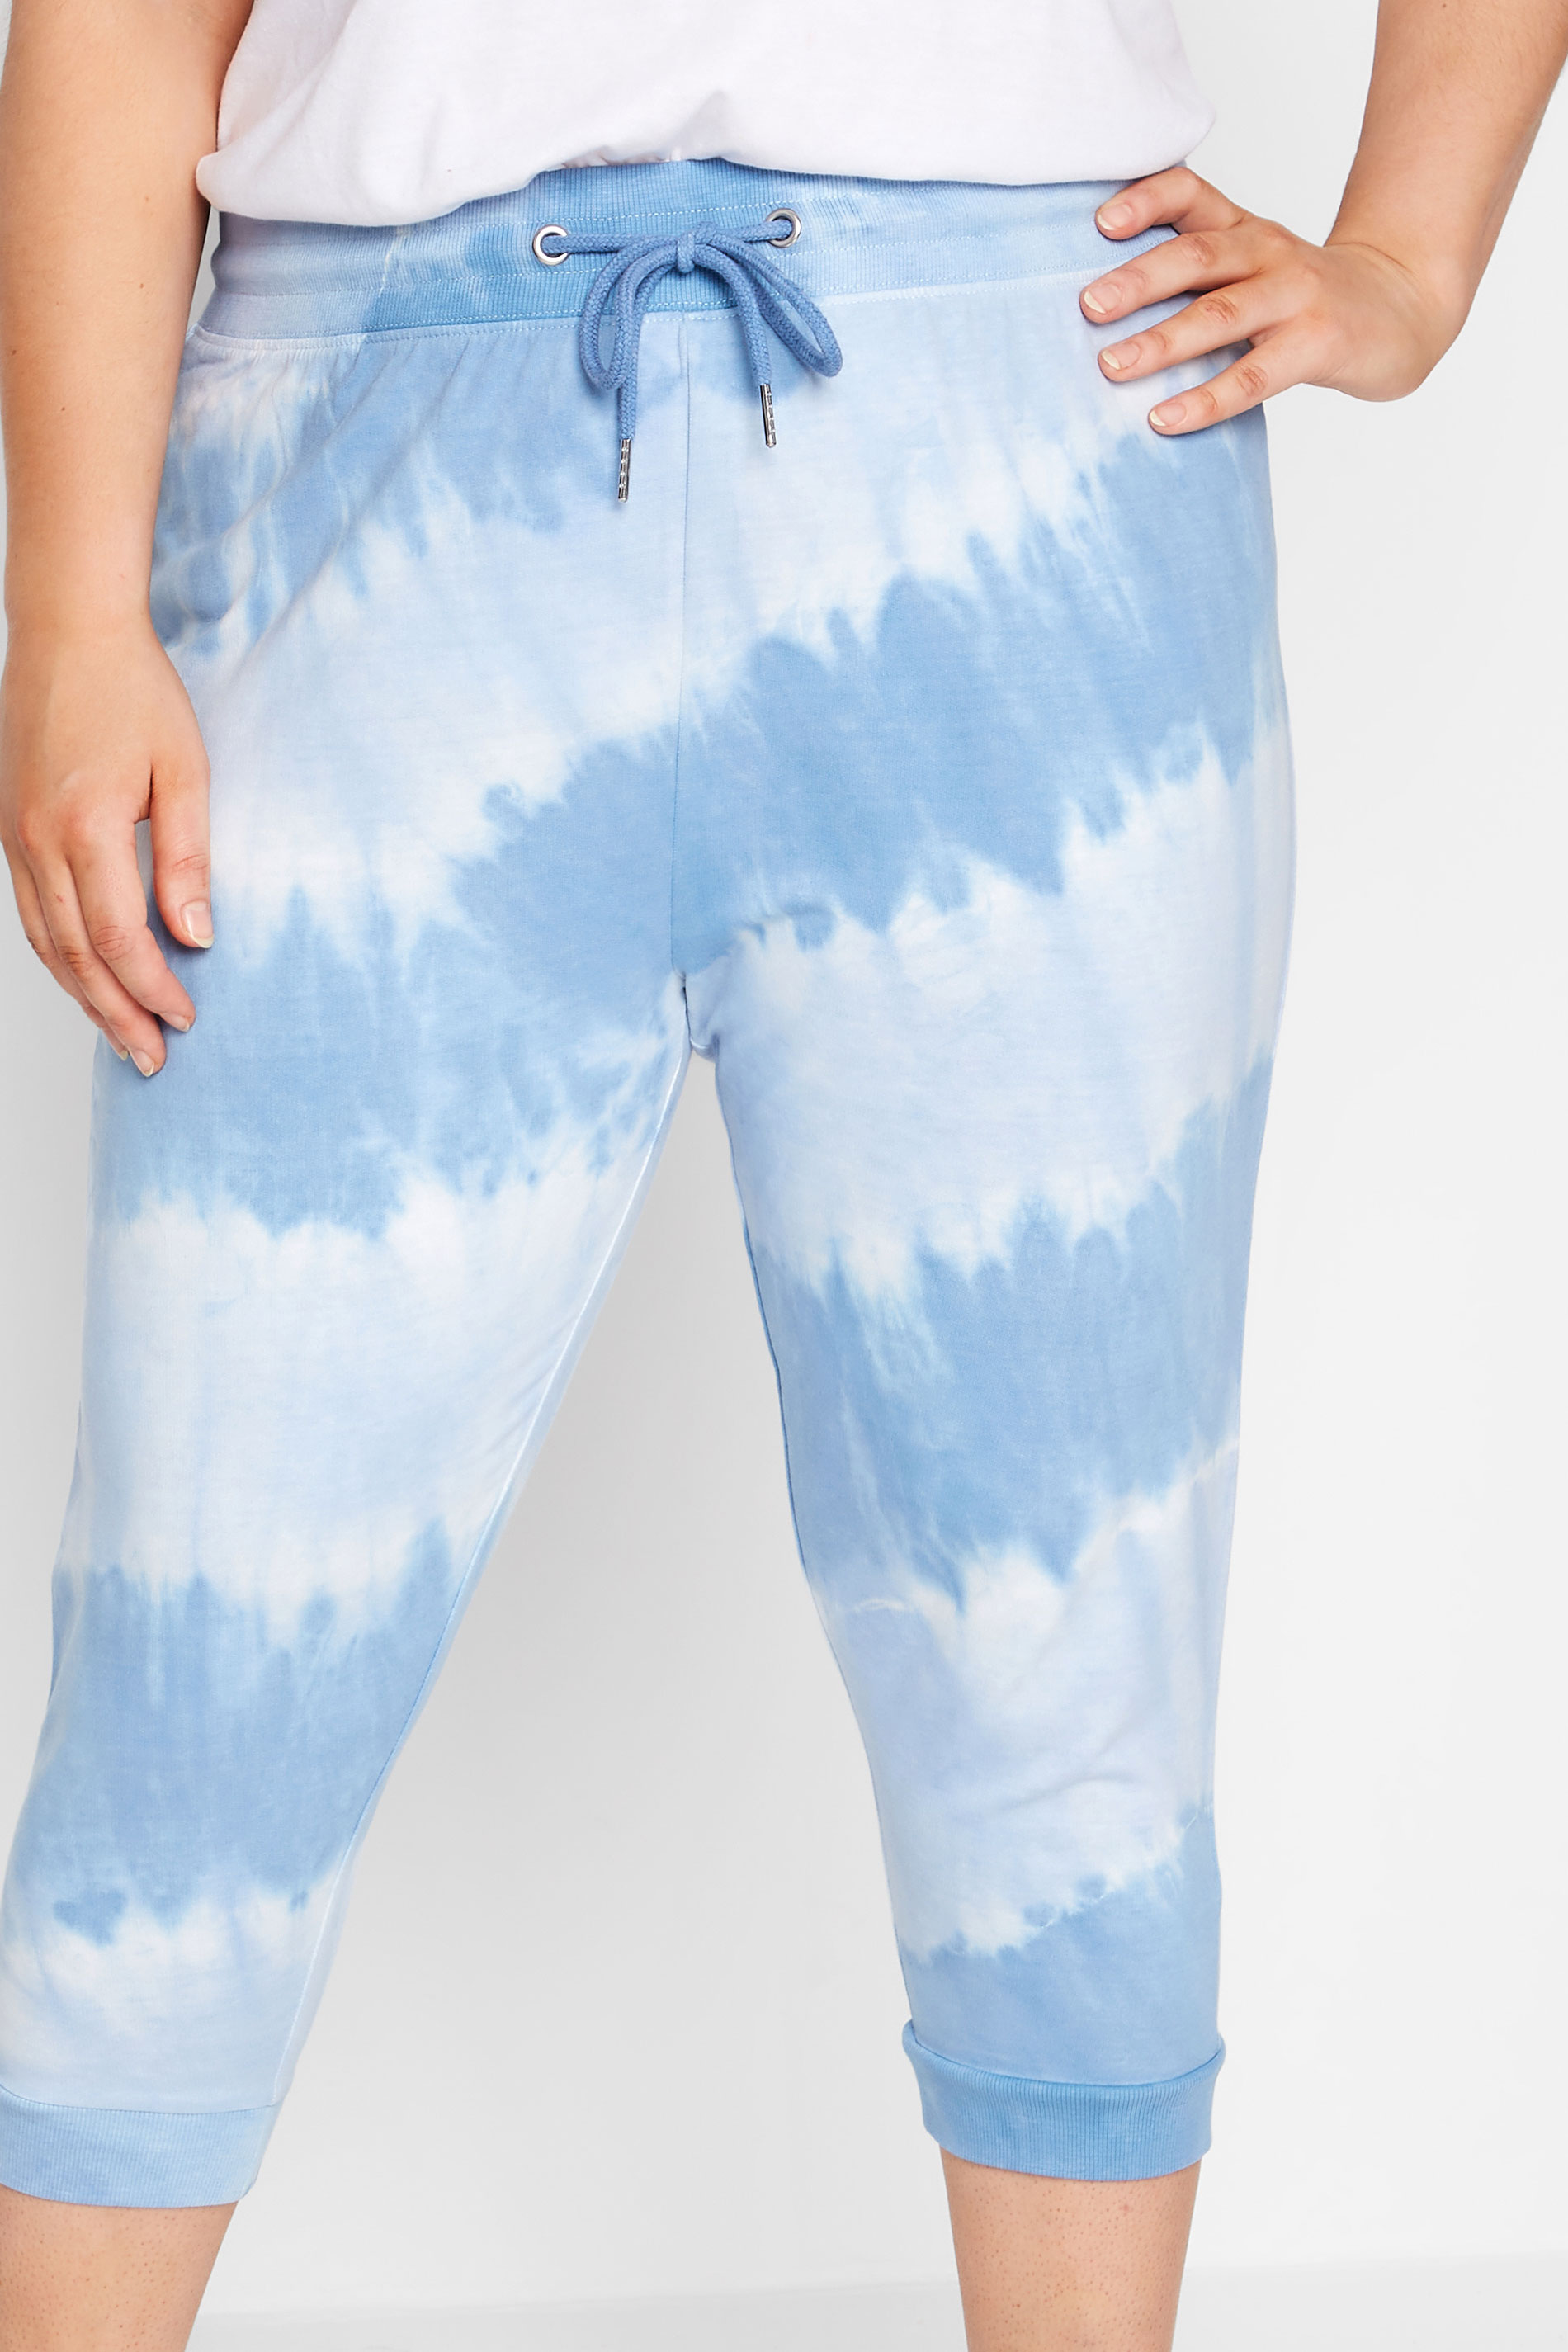 Grande taille  Pantalons Grande taille  Joggings | Jogging Bleu Ciel & Blanc Pantacourt - ZI10381